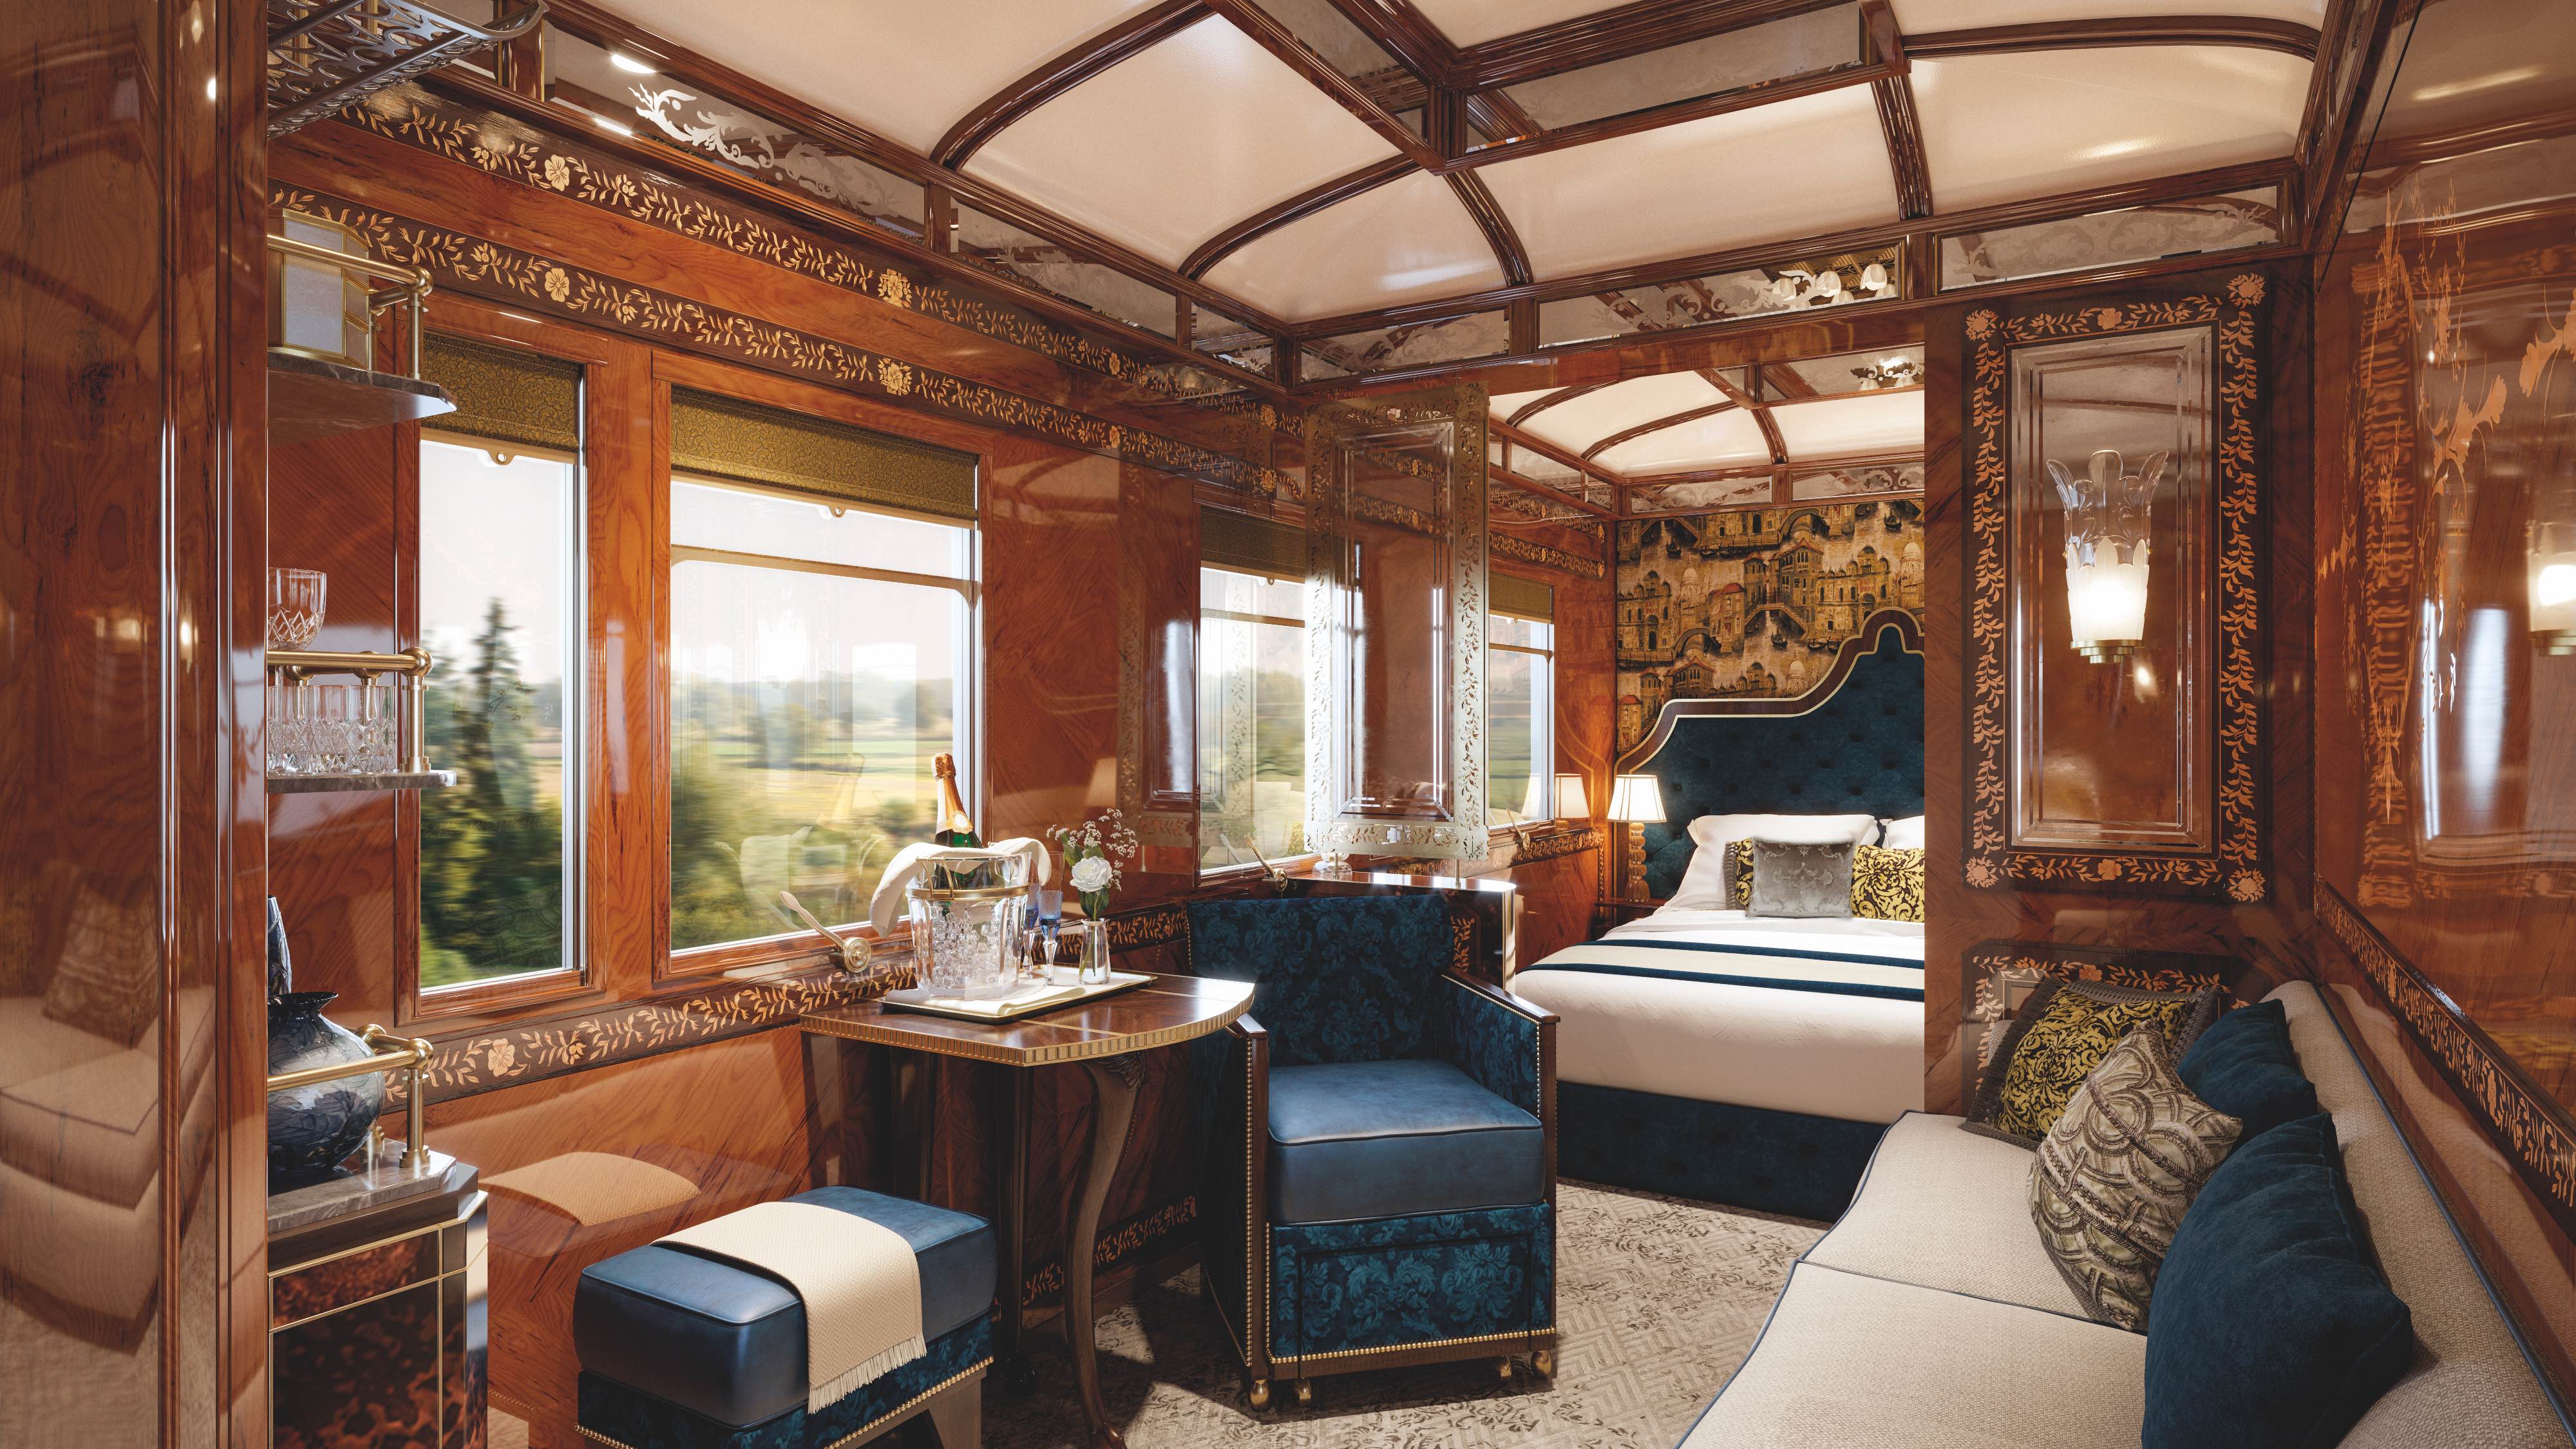 Venice Simplon Orient Express 在 2018 年 3 月推出的全新大套房車廂，特別將巴黎、威尼斯、伊斯坦堡的城市風情融入設計中。